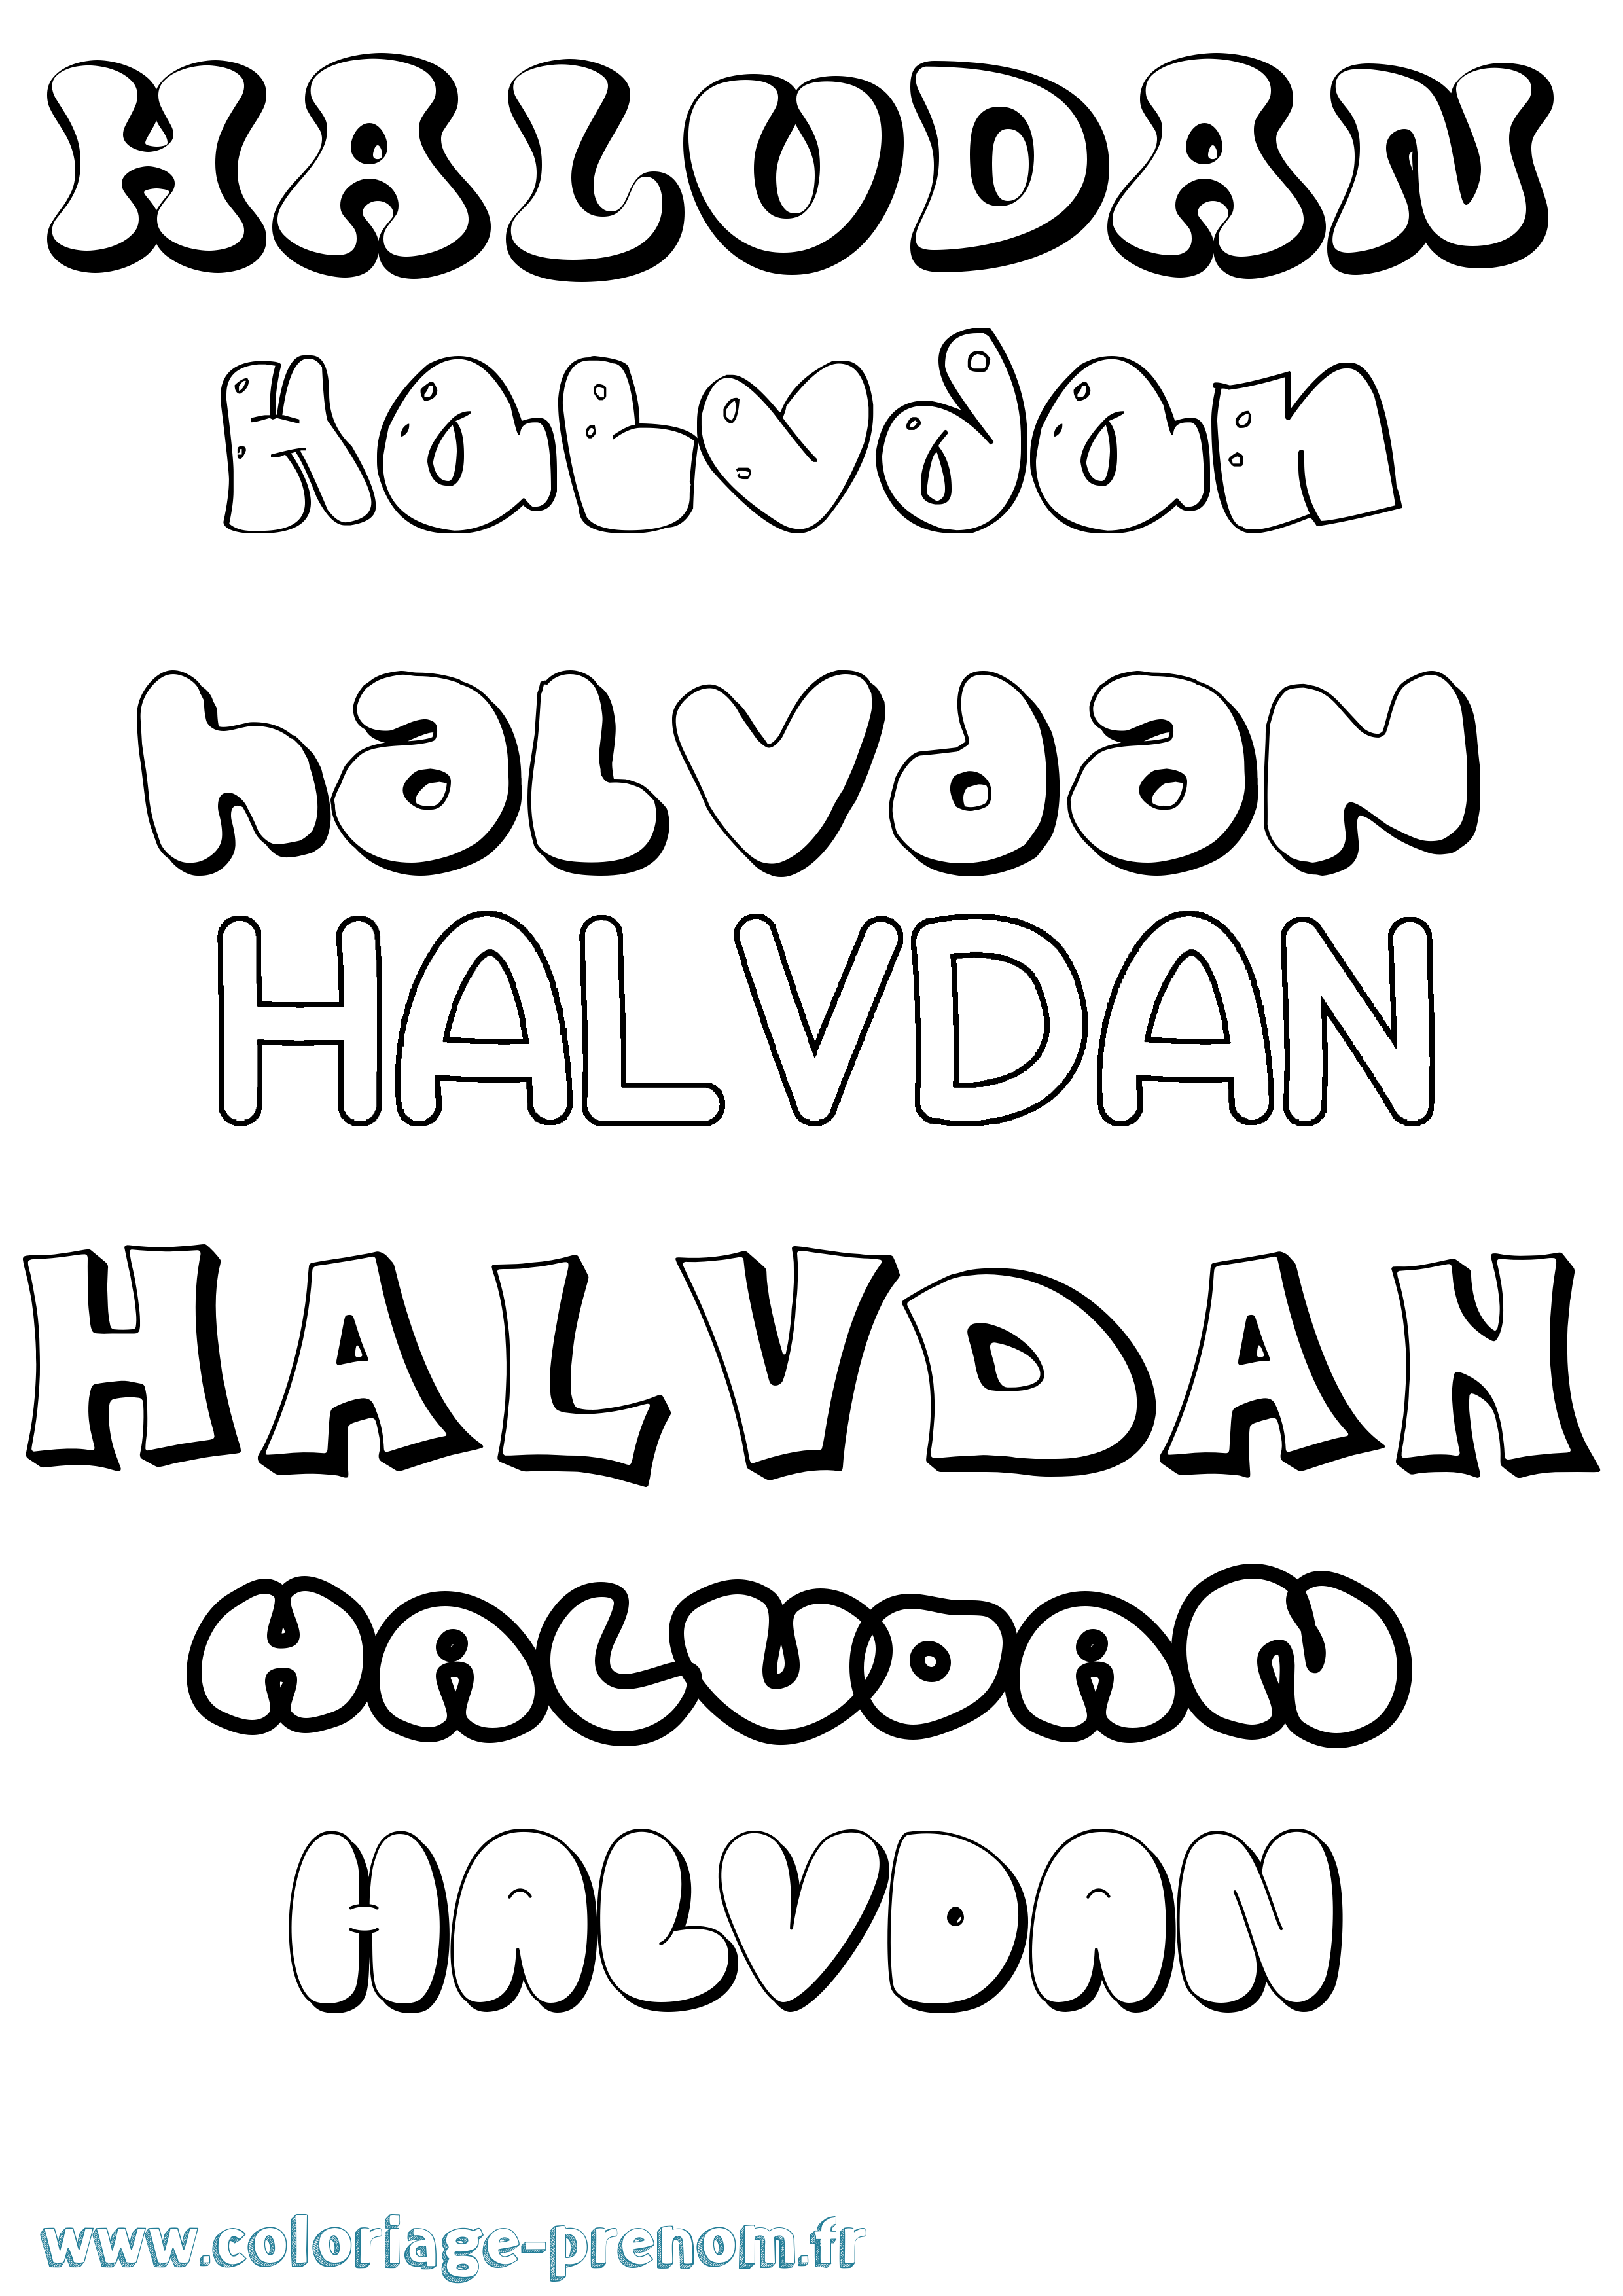 Coloriage prénom Halvdan Bubble